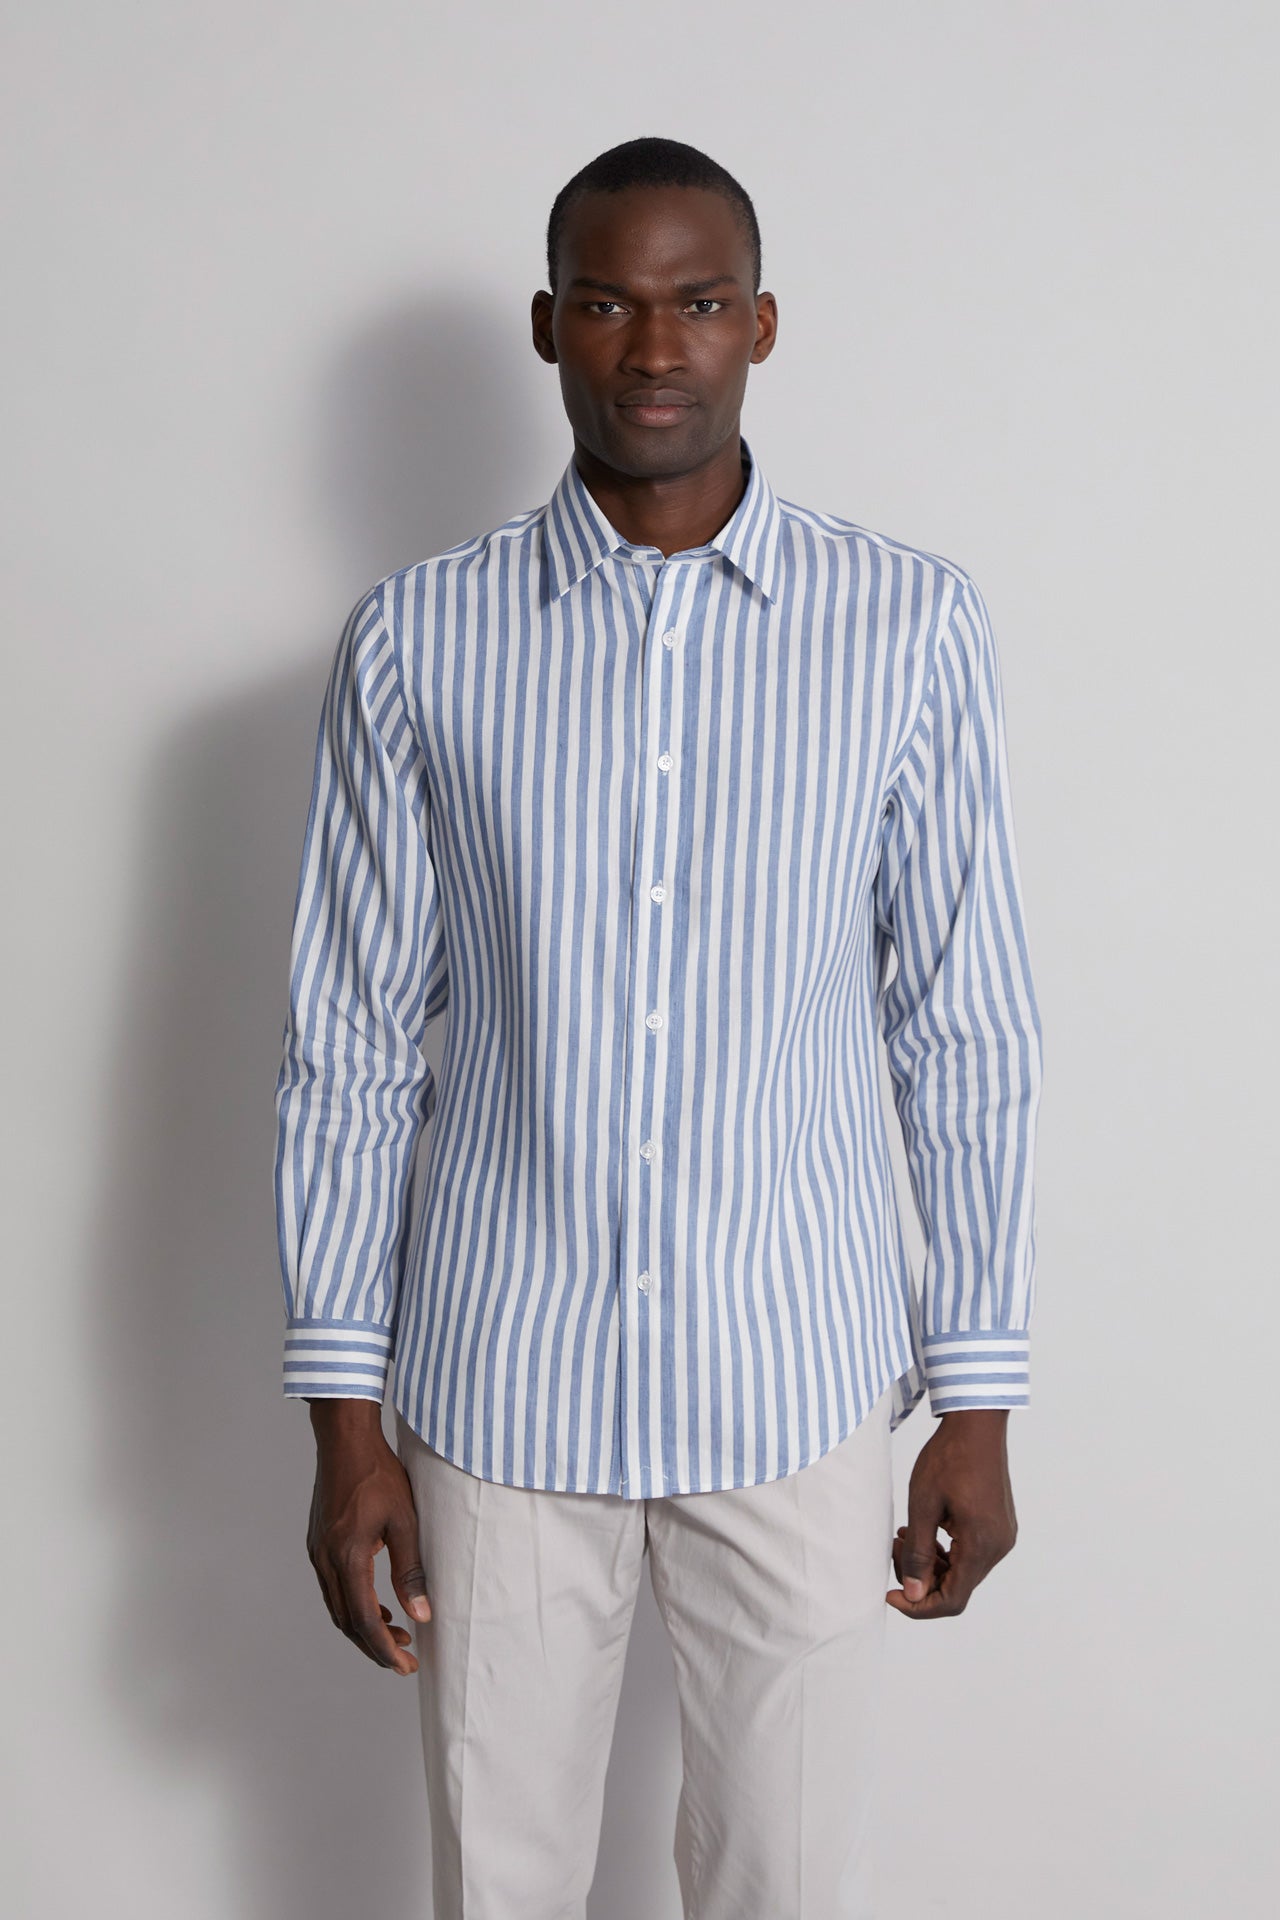 Designer Men's Striped Linen Shirt - White & Blue - Front View 